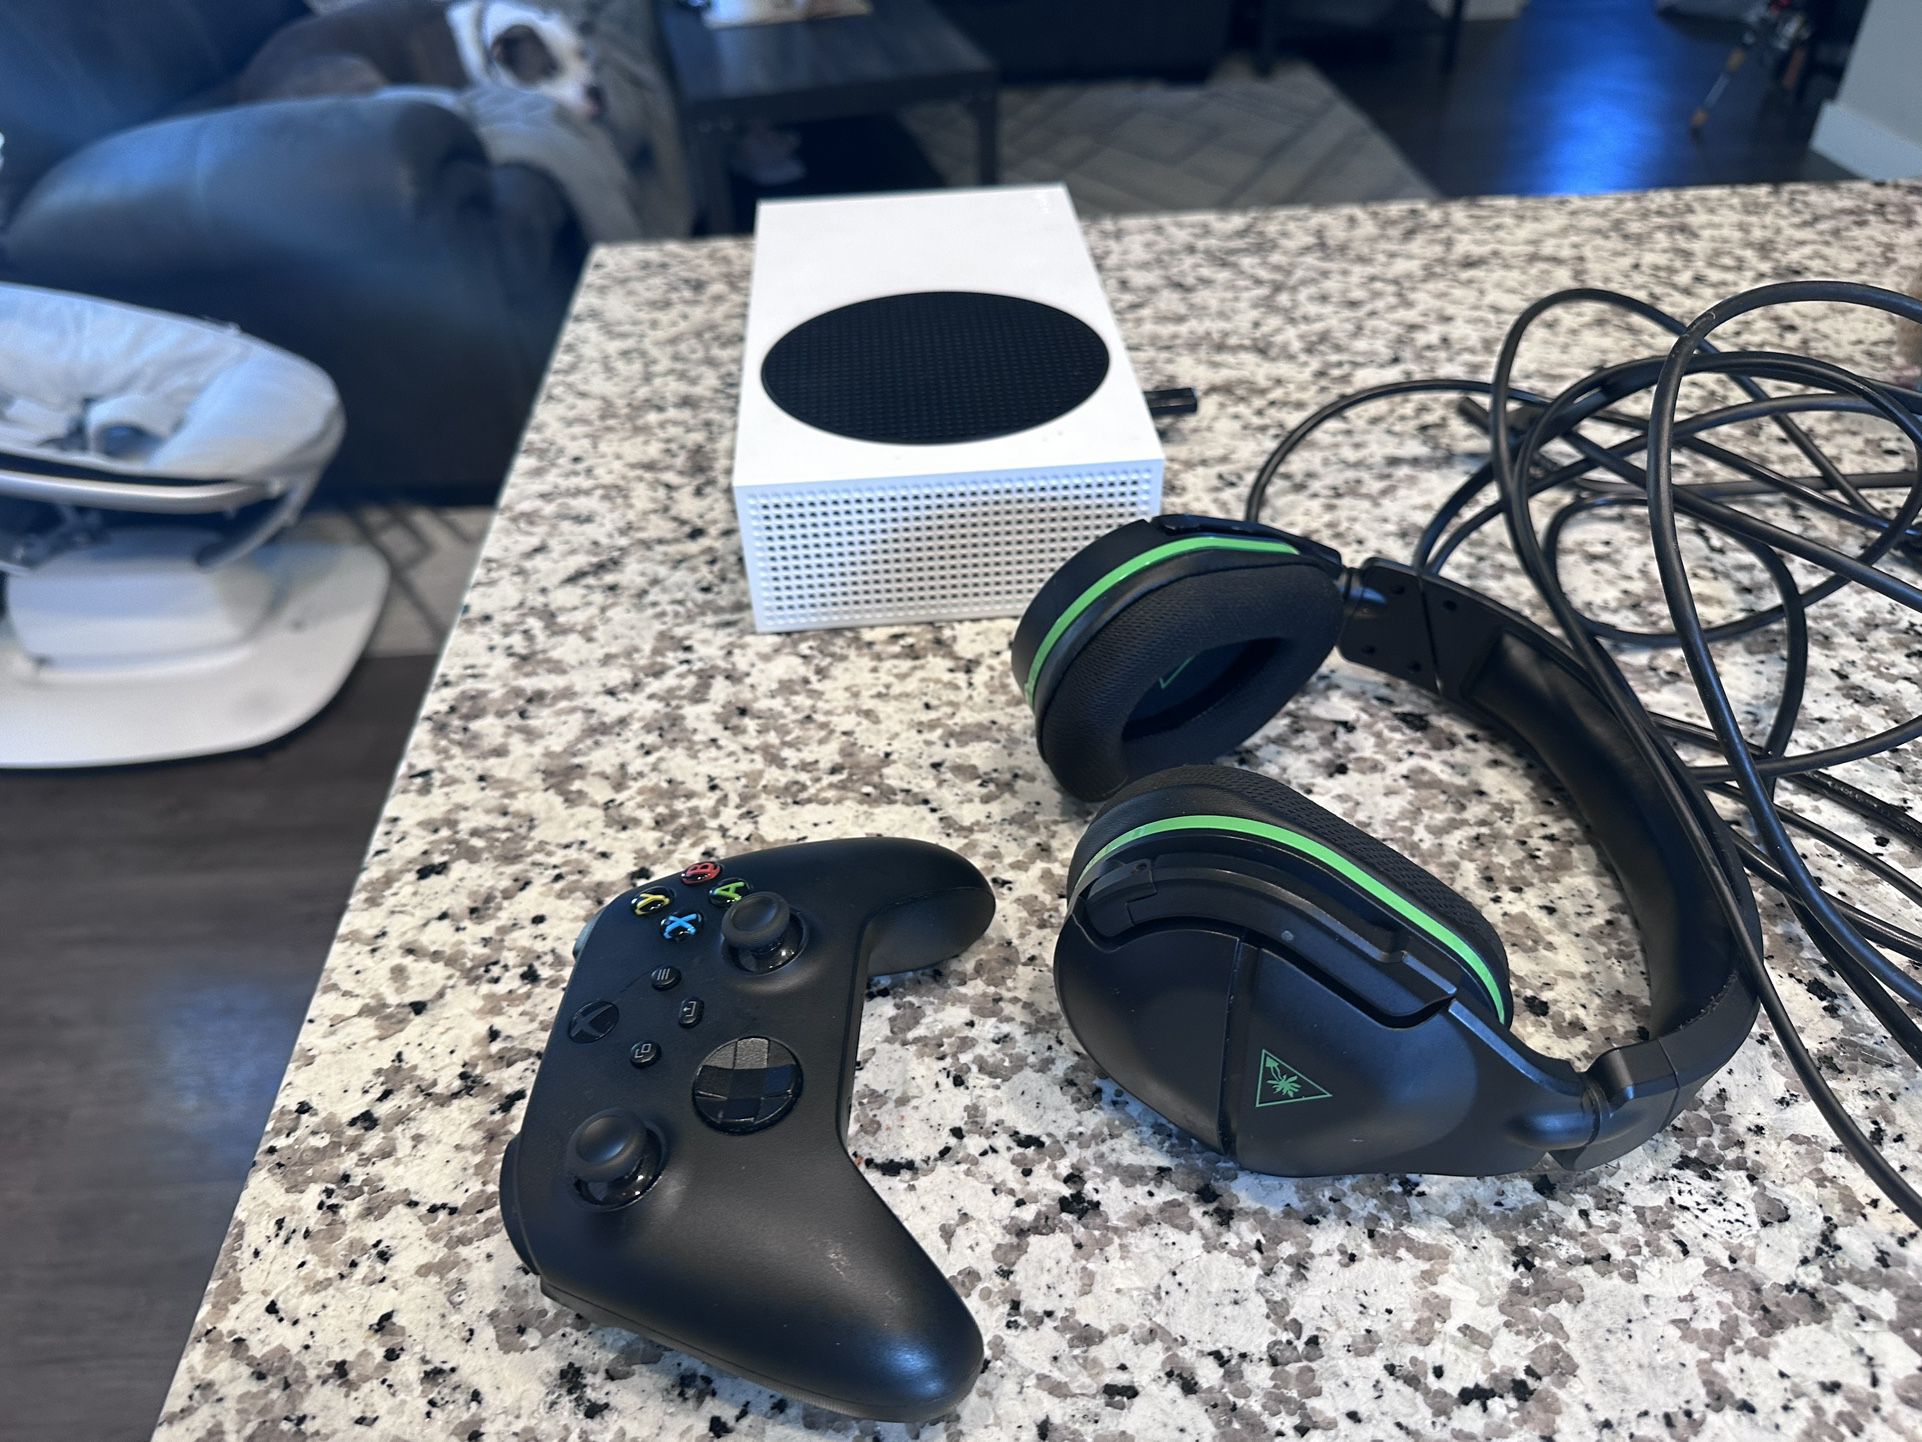 Xbox S, Controller, Bluetooth Turtle Beach Headset.